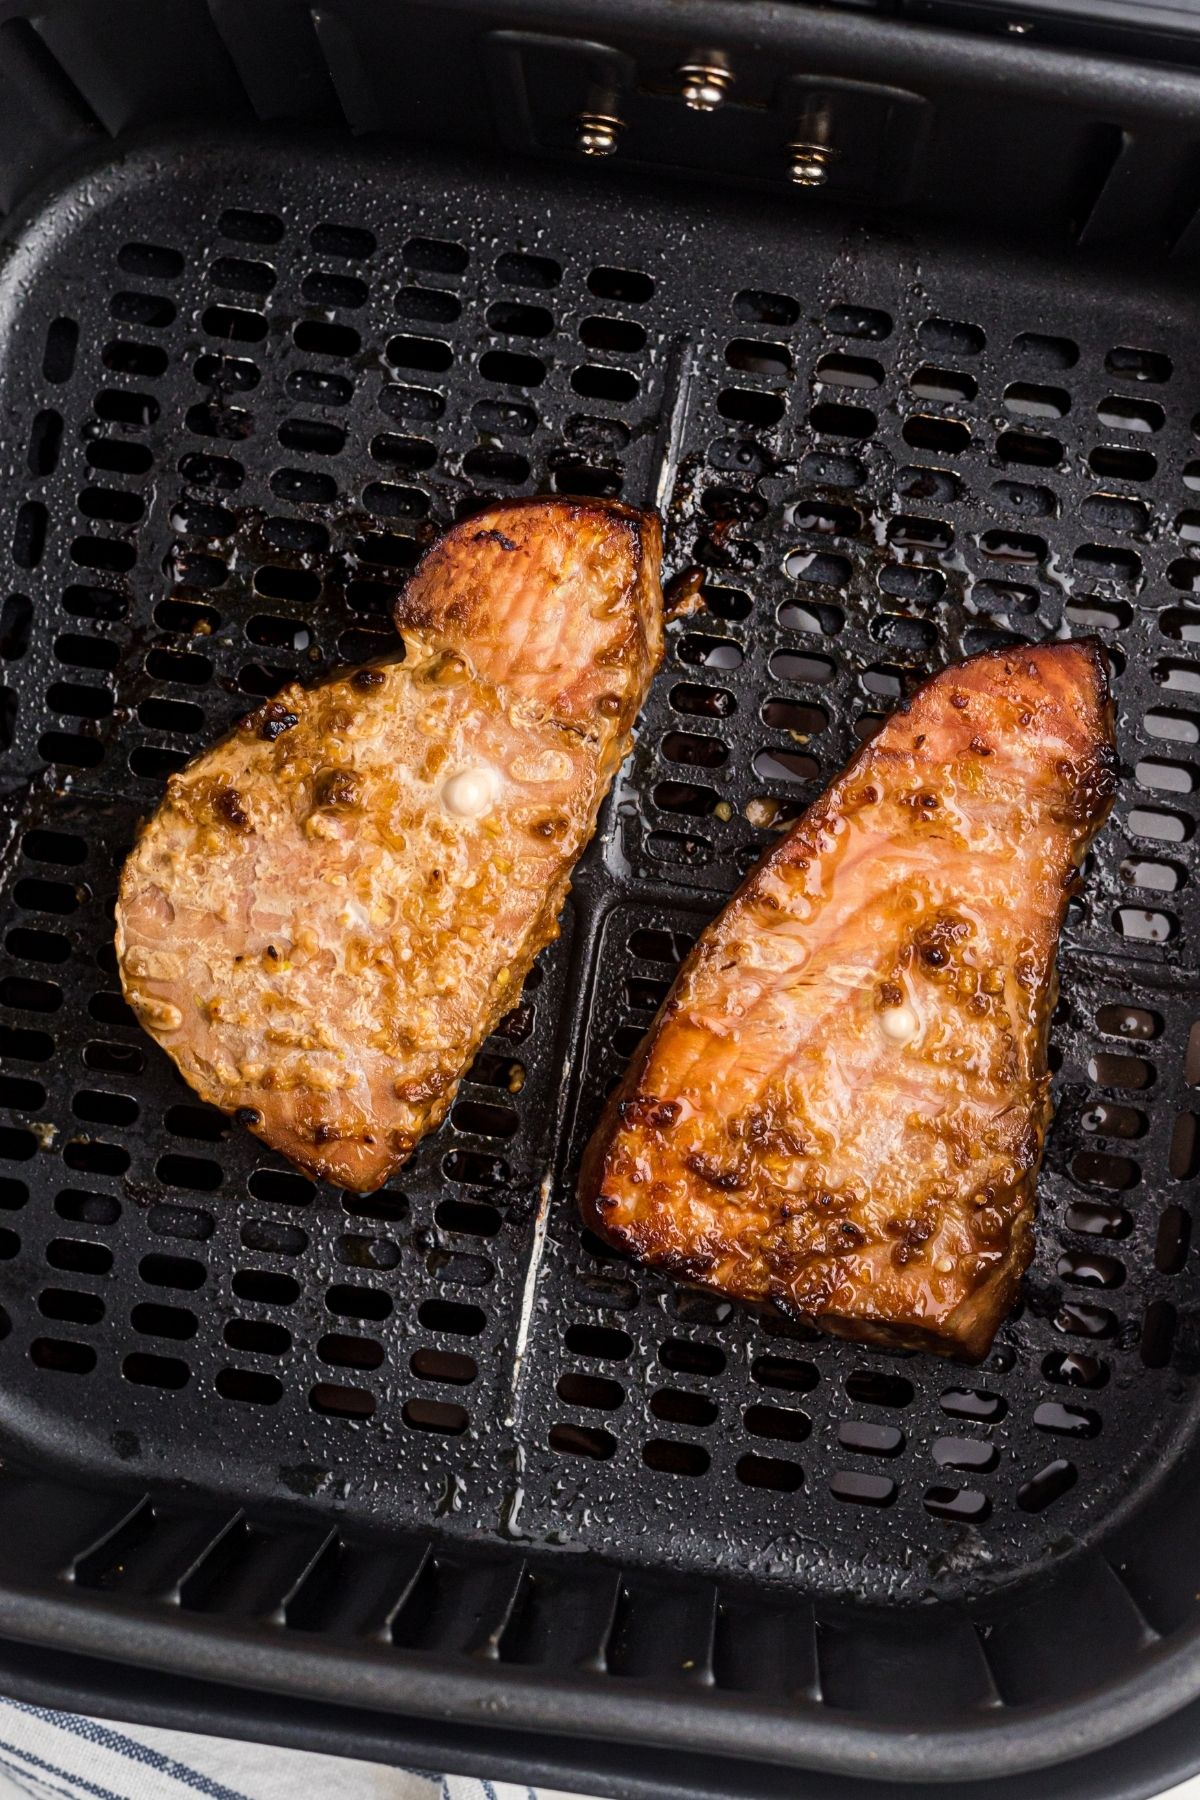 Juicy golden brown cooked tuna steaks in the air fryer basket